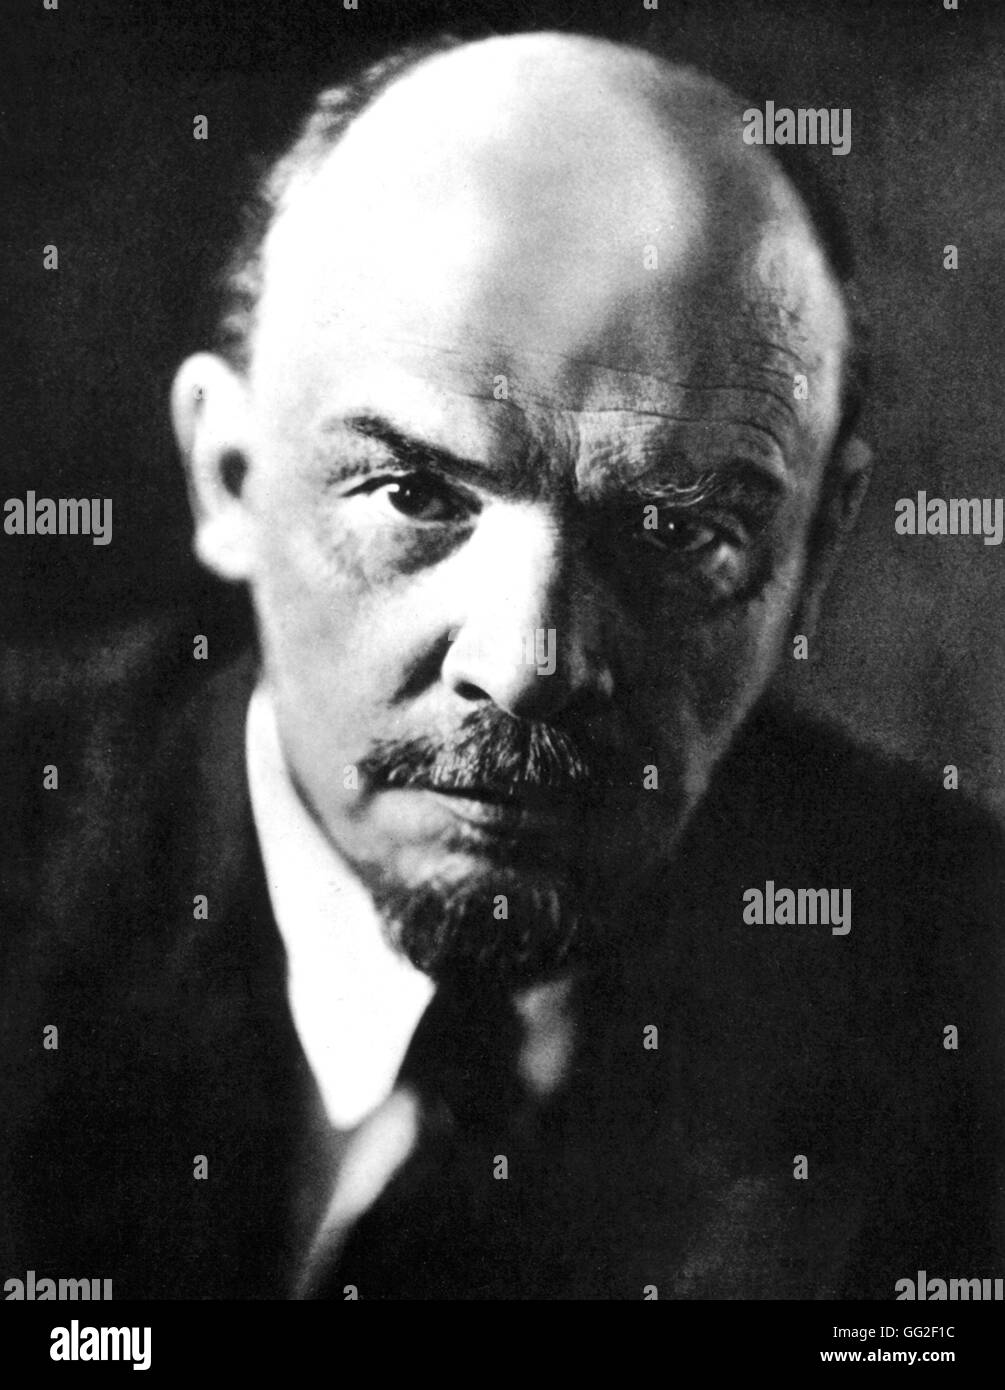 Moscow. Portrait of Lenin July 1920 U.S.S.R. Stock Photo